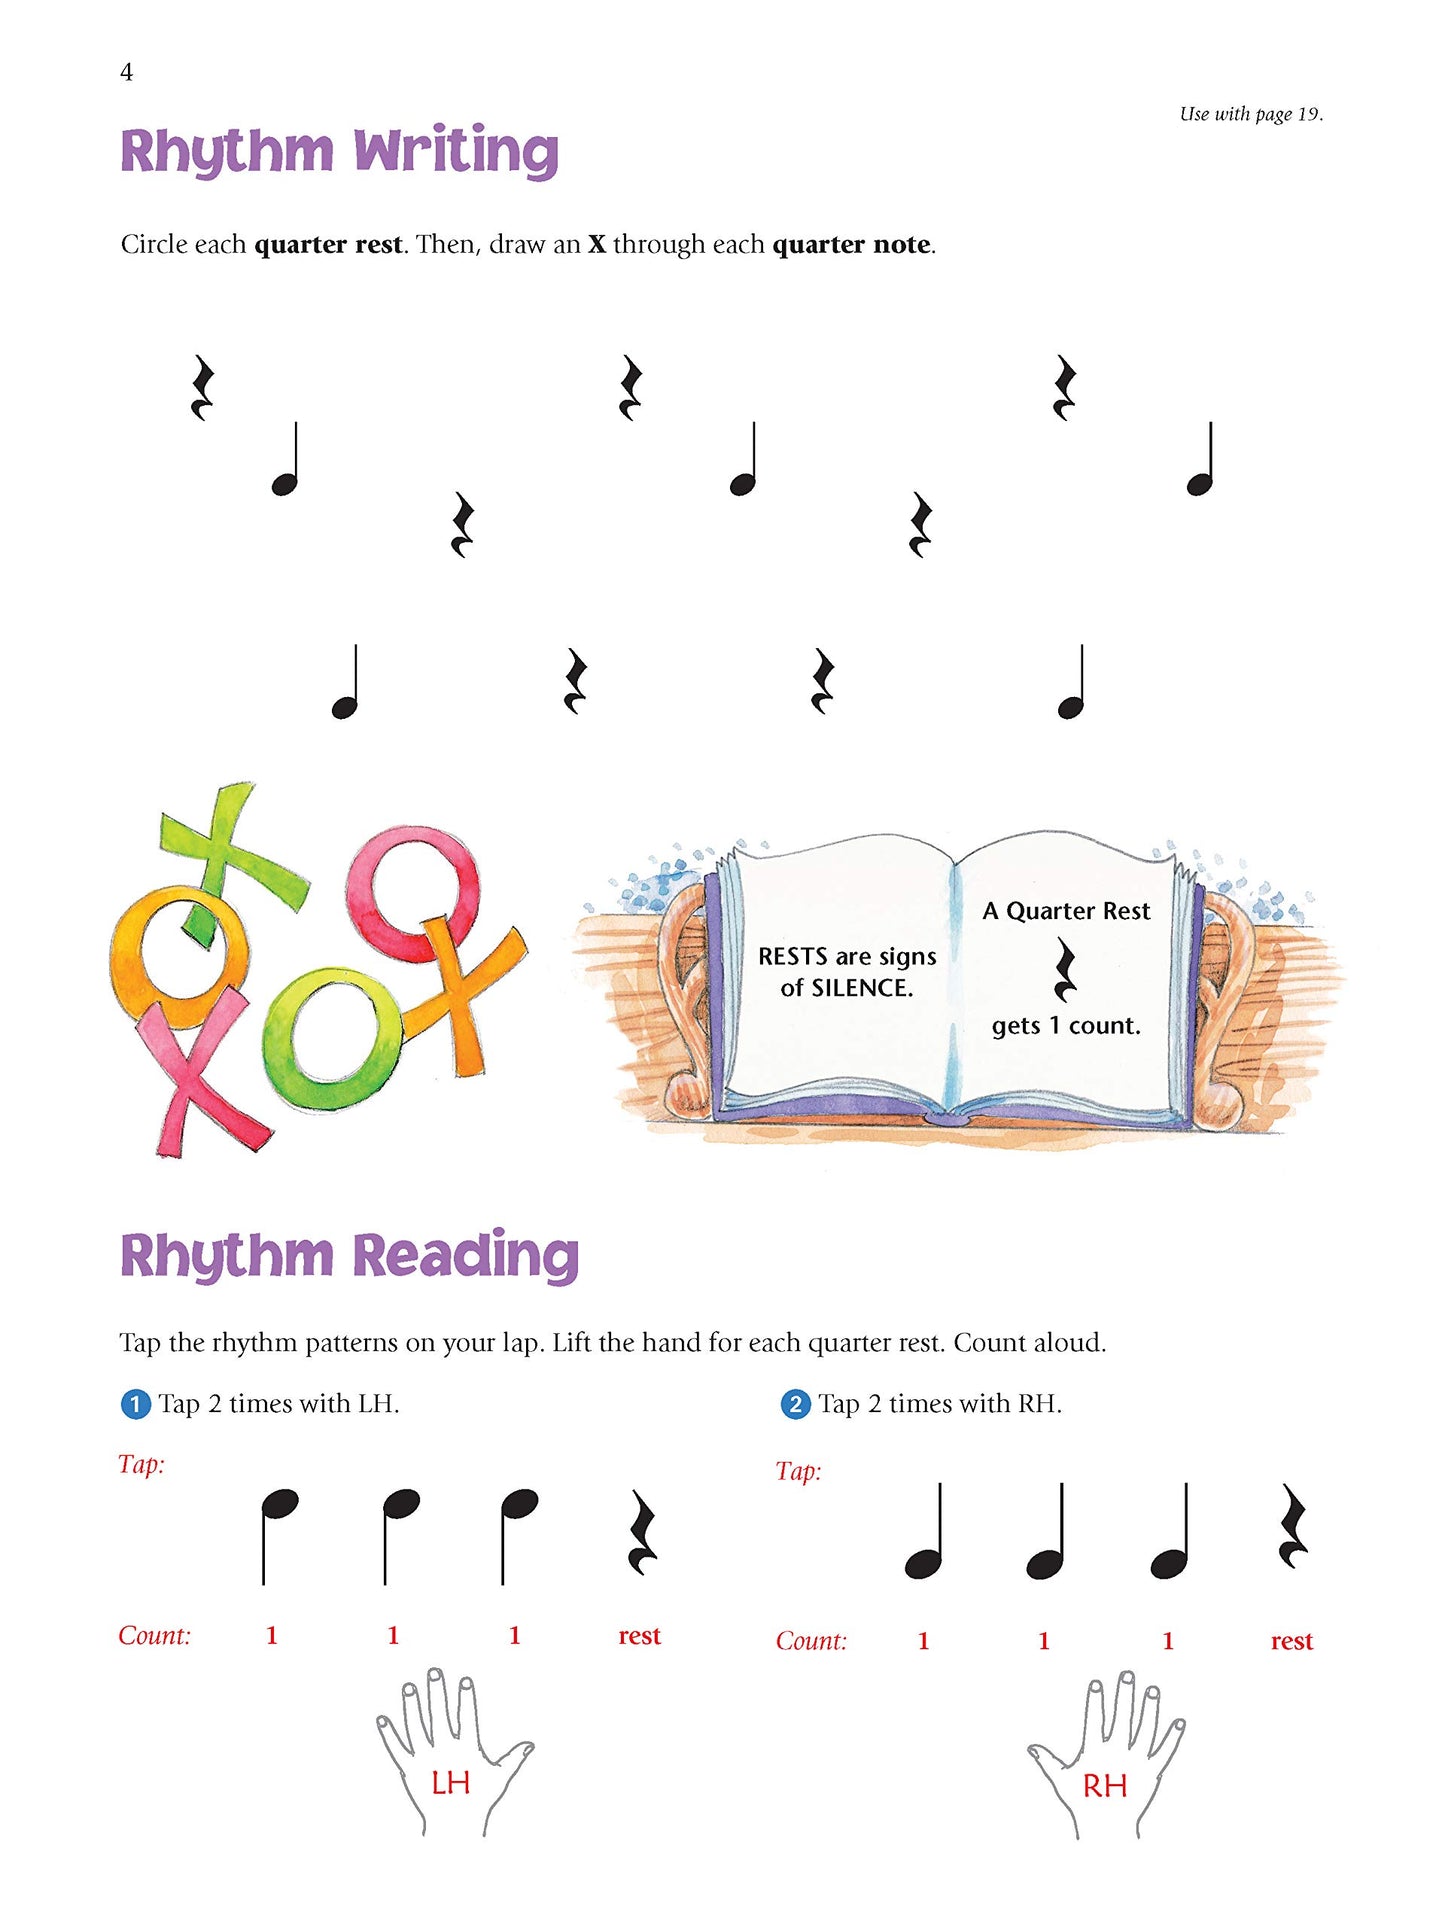 Alfred's Music For Little Mozarts - Rhythm Speller Book 1